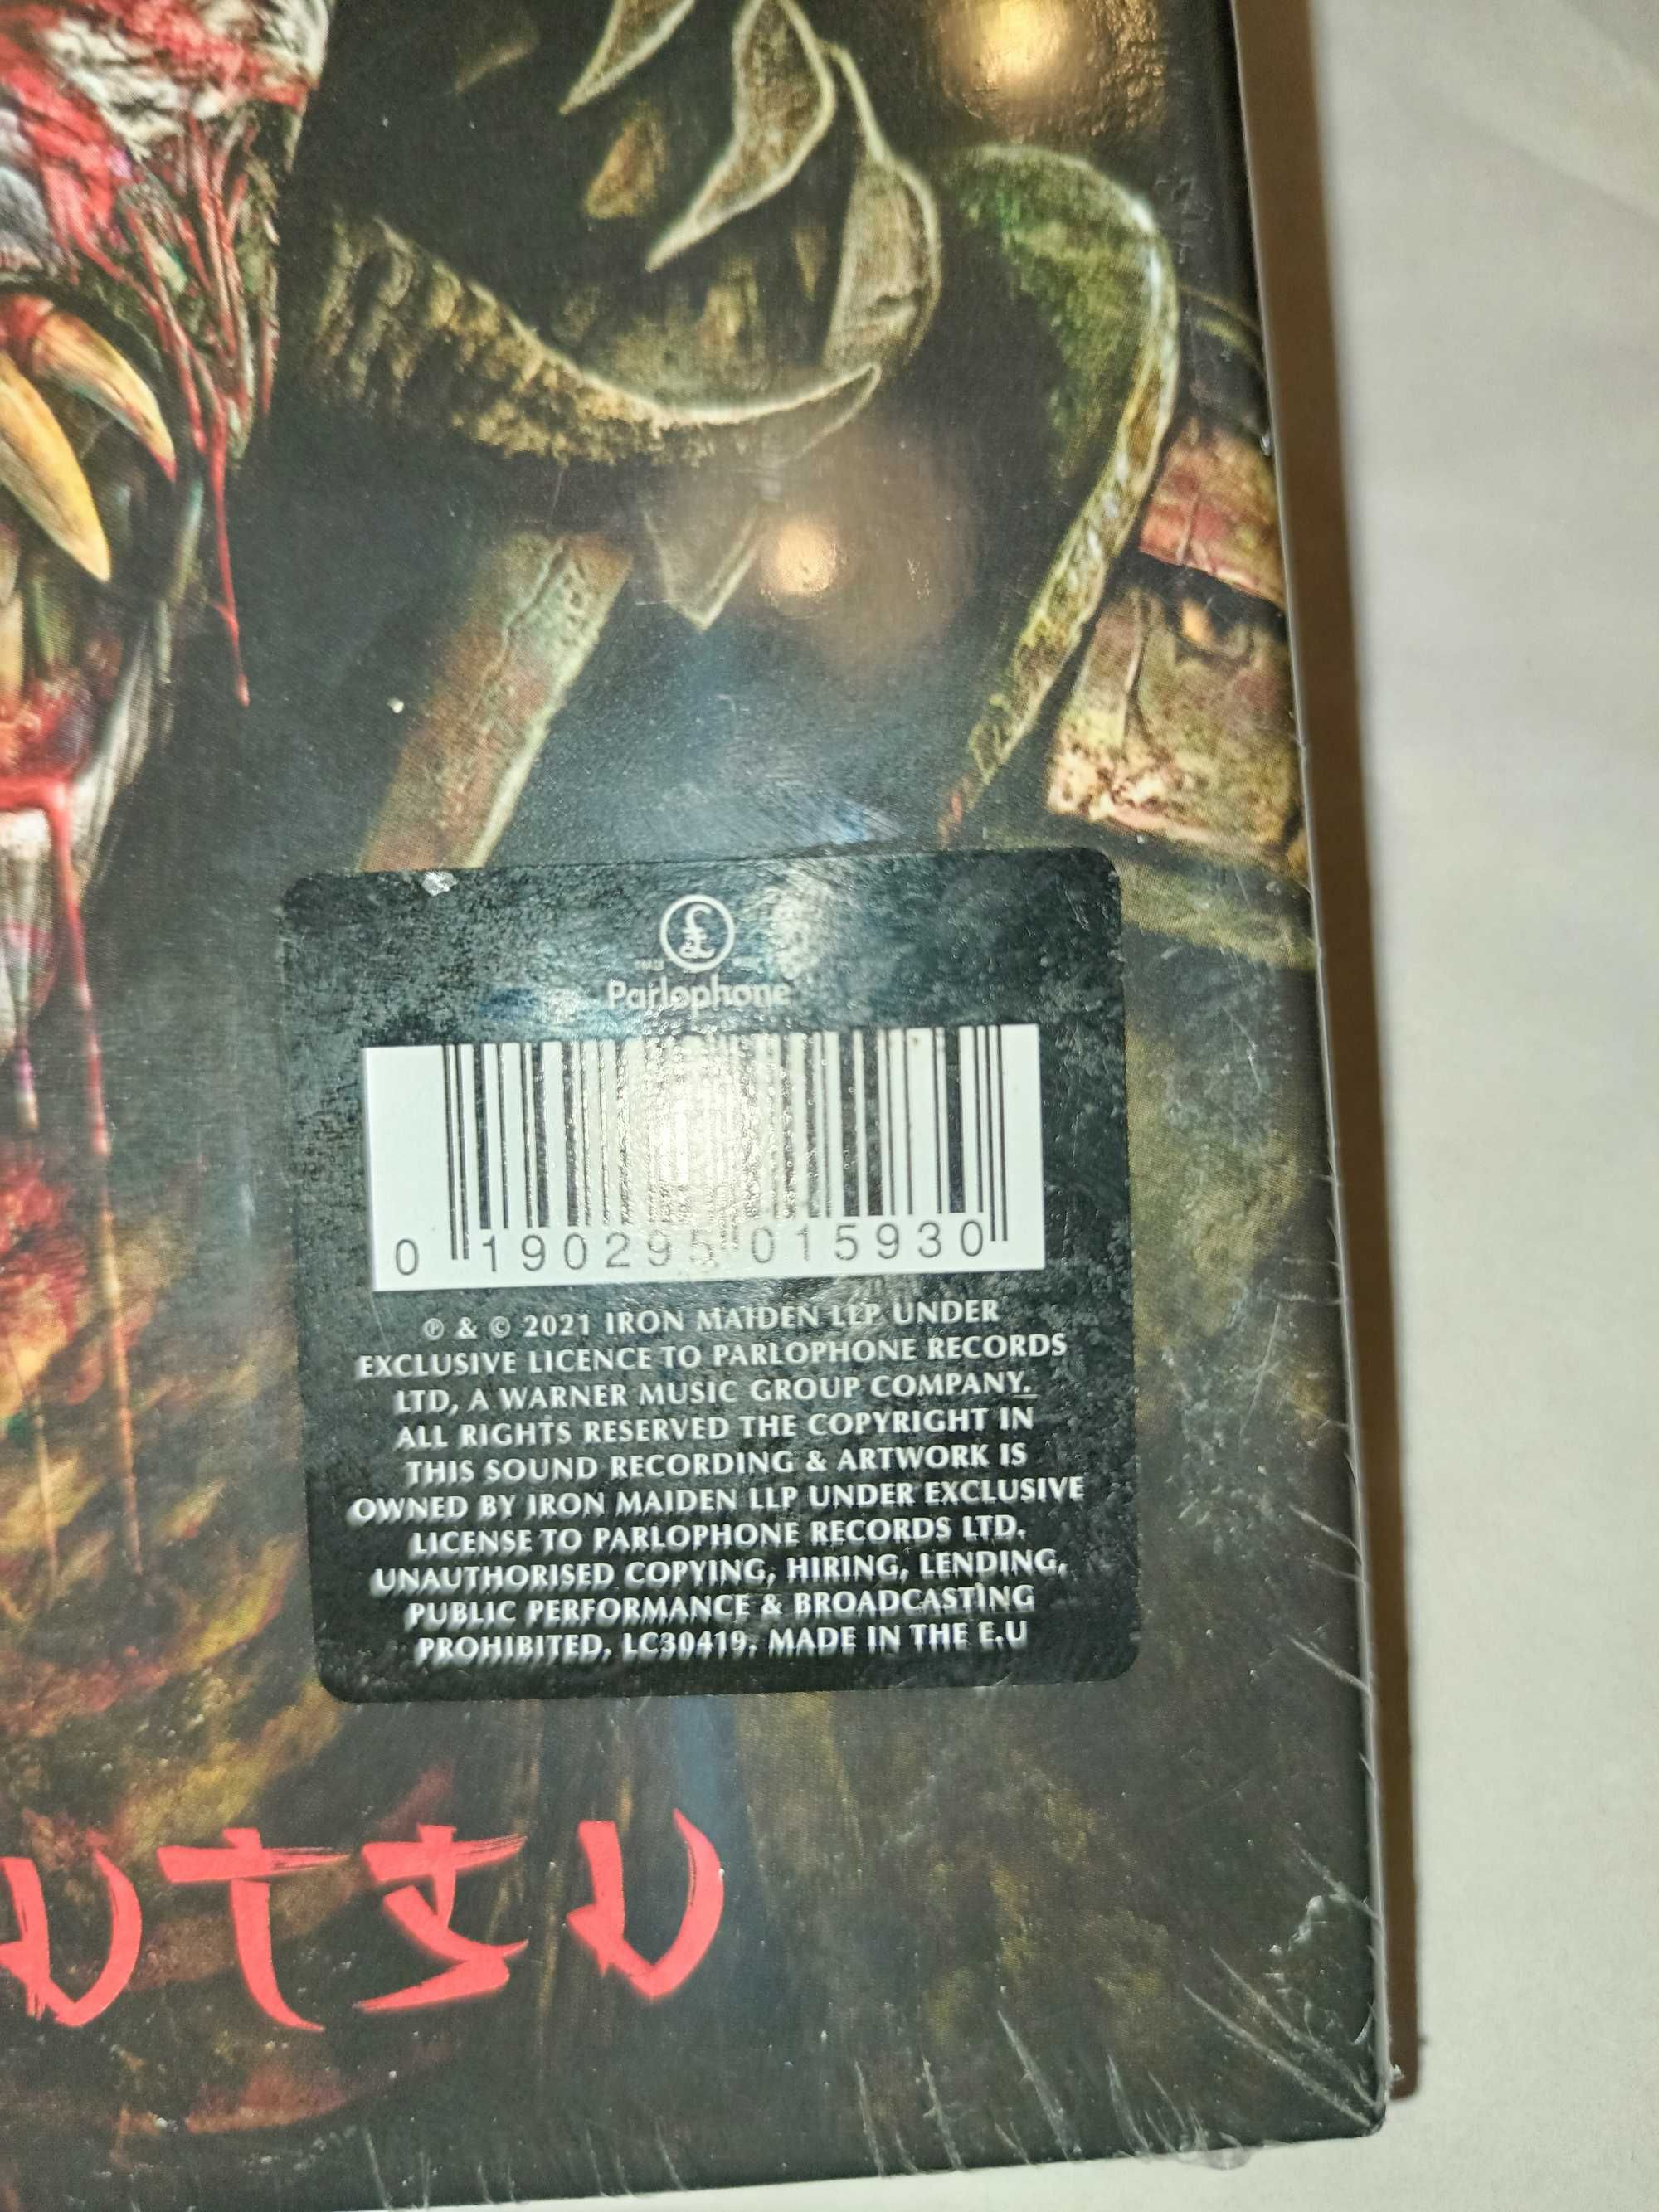 Iron Maiden - Senjutsu (2Cd) Deluxe Edition, Limited Edition